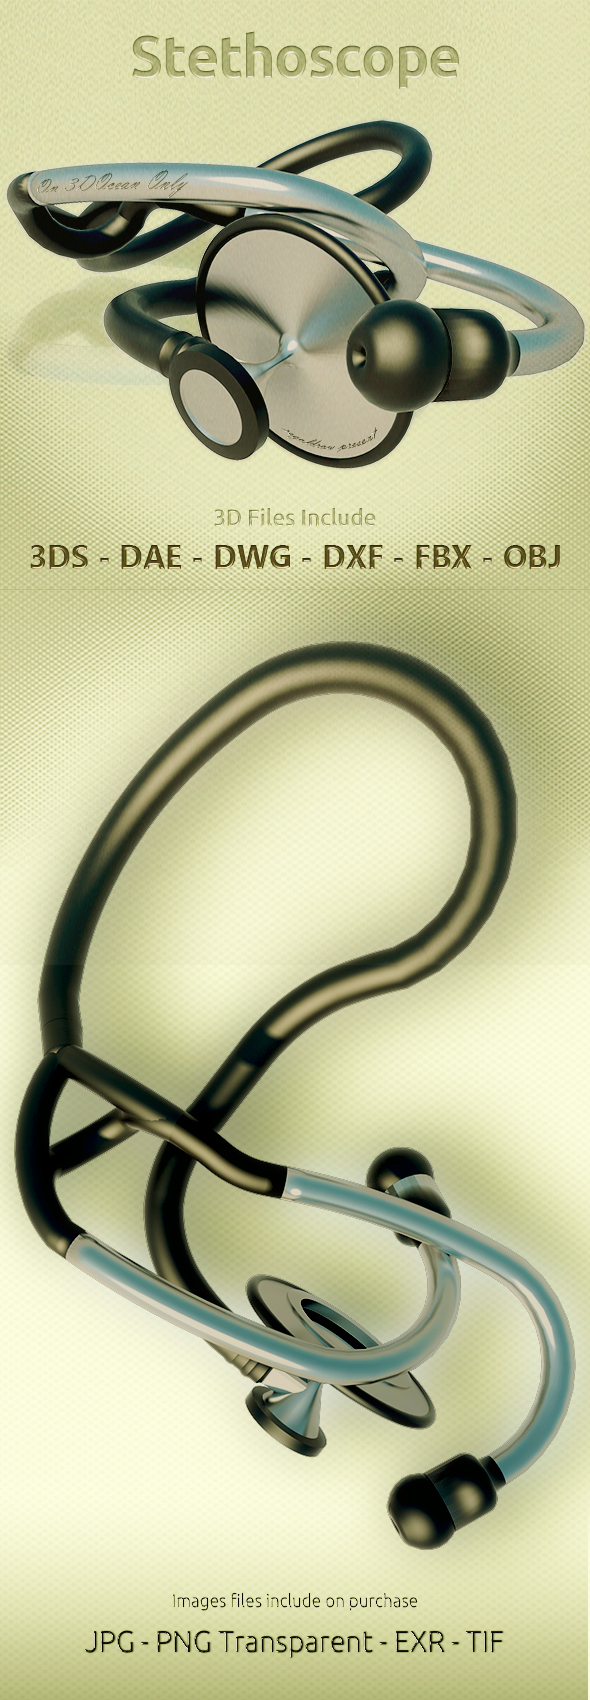 Stethoscope 3D Objects - 3Docean 32847583